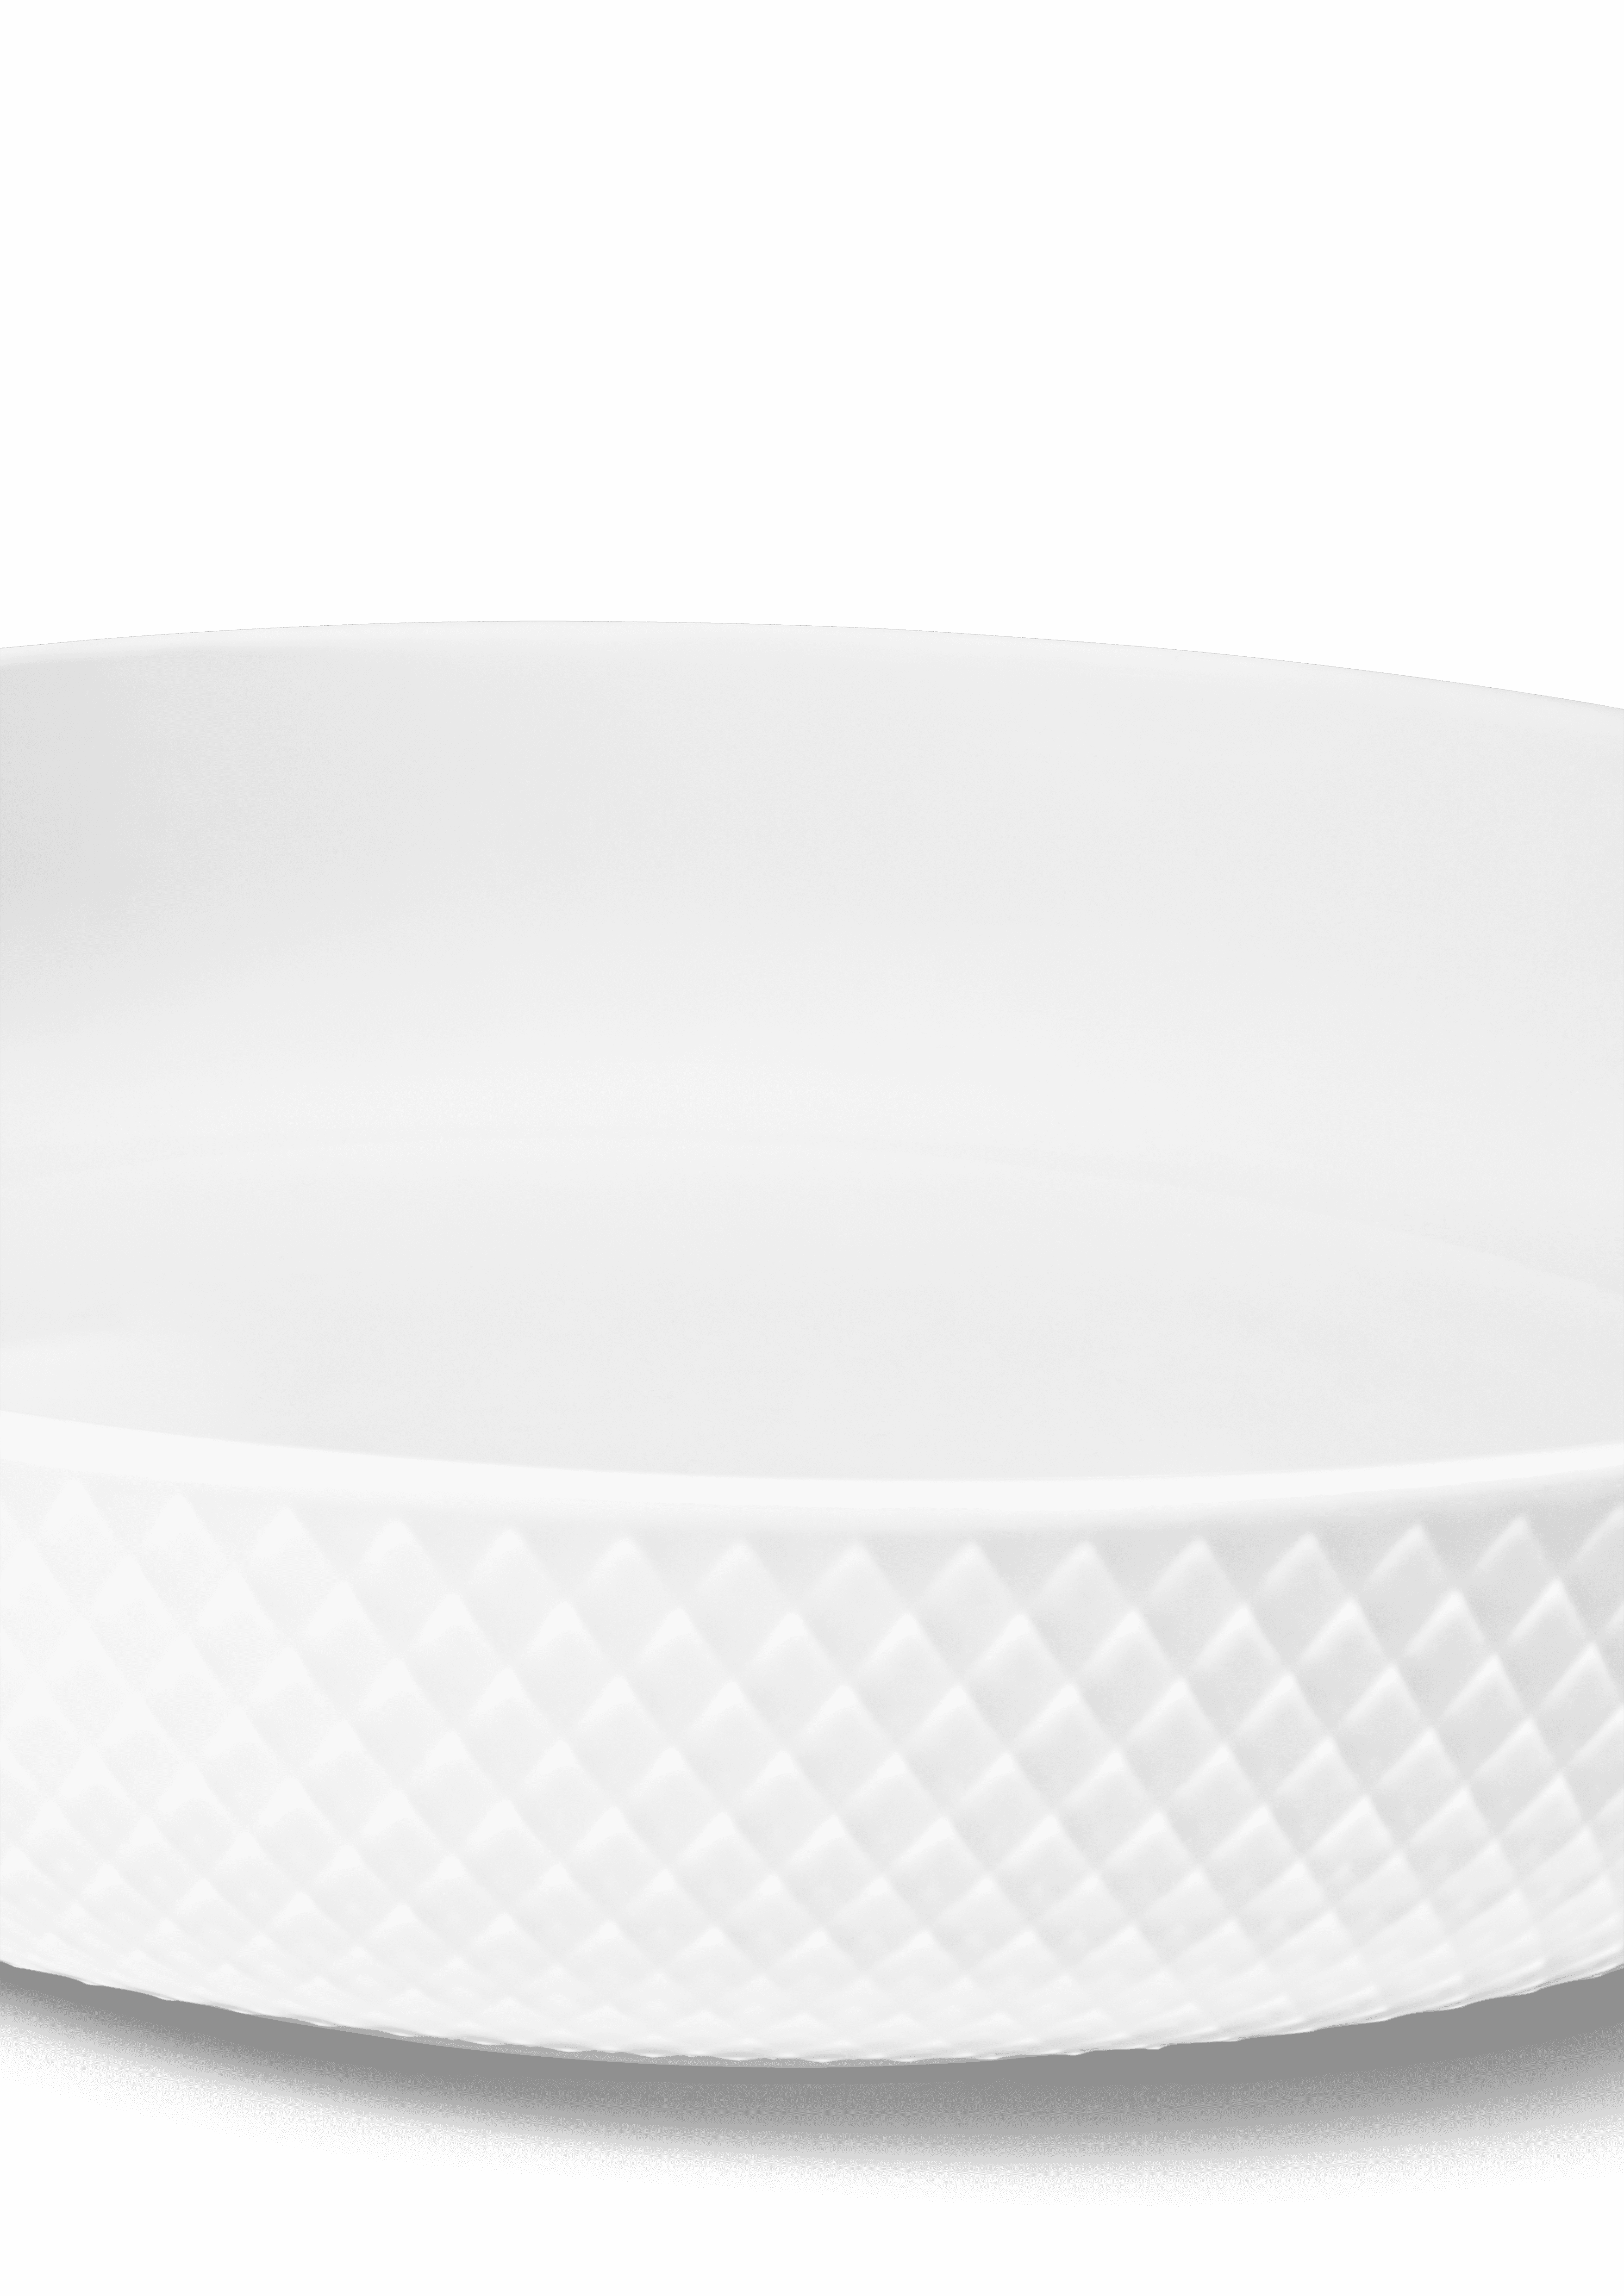 Serving bowl Ø28.5 cm